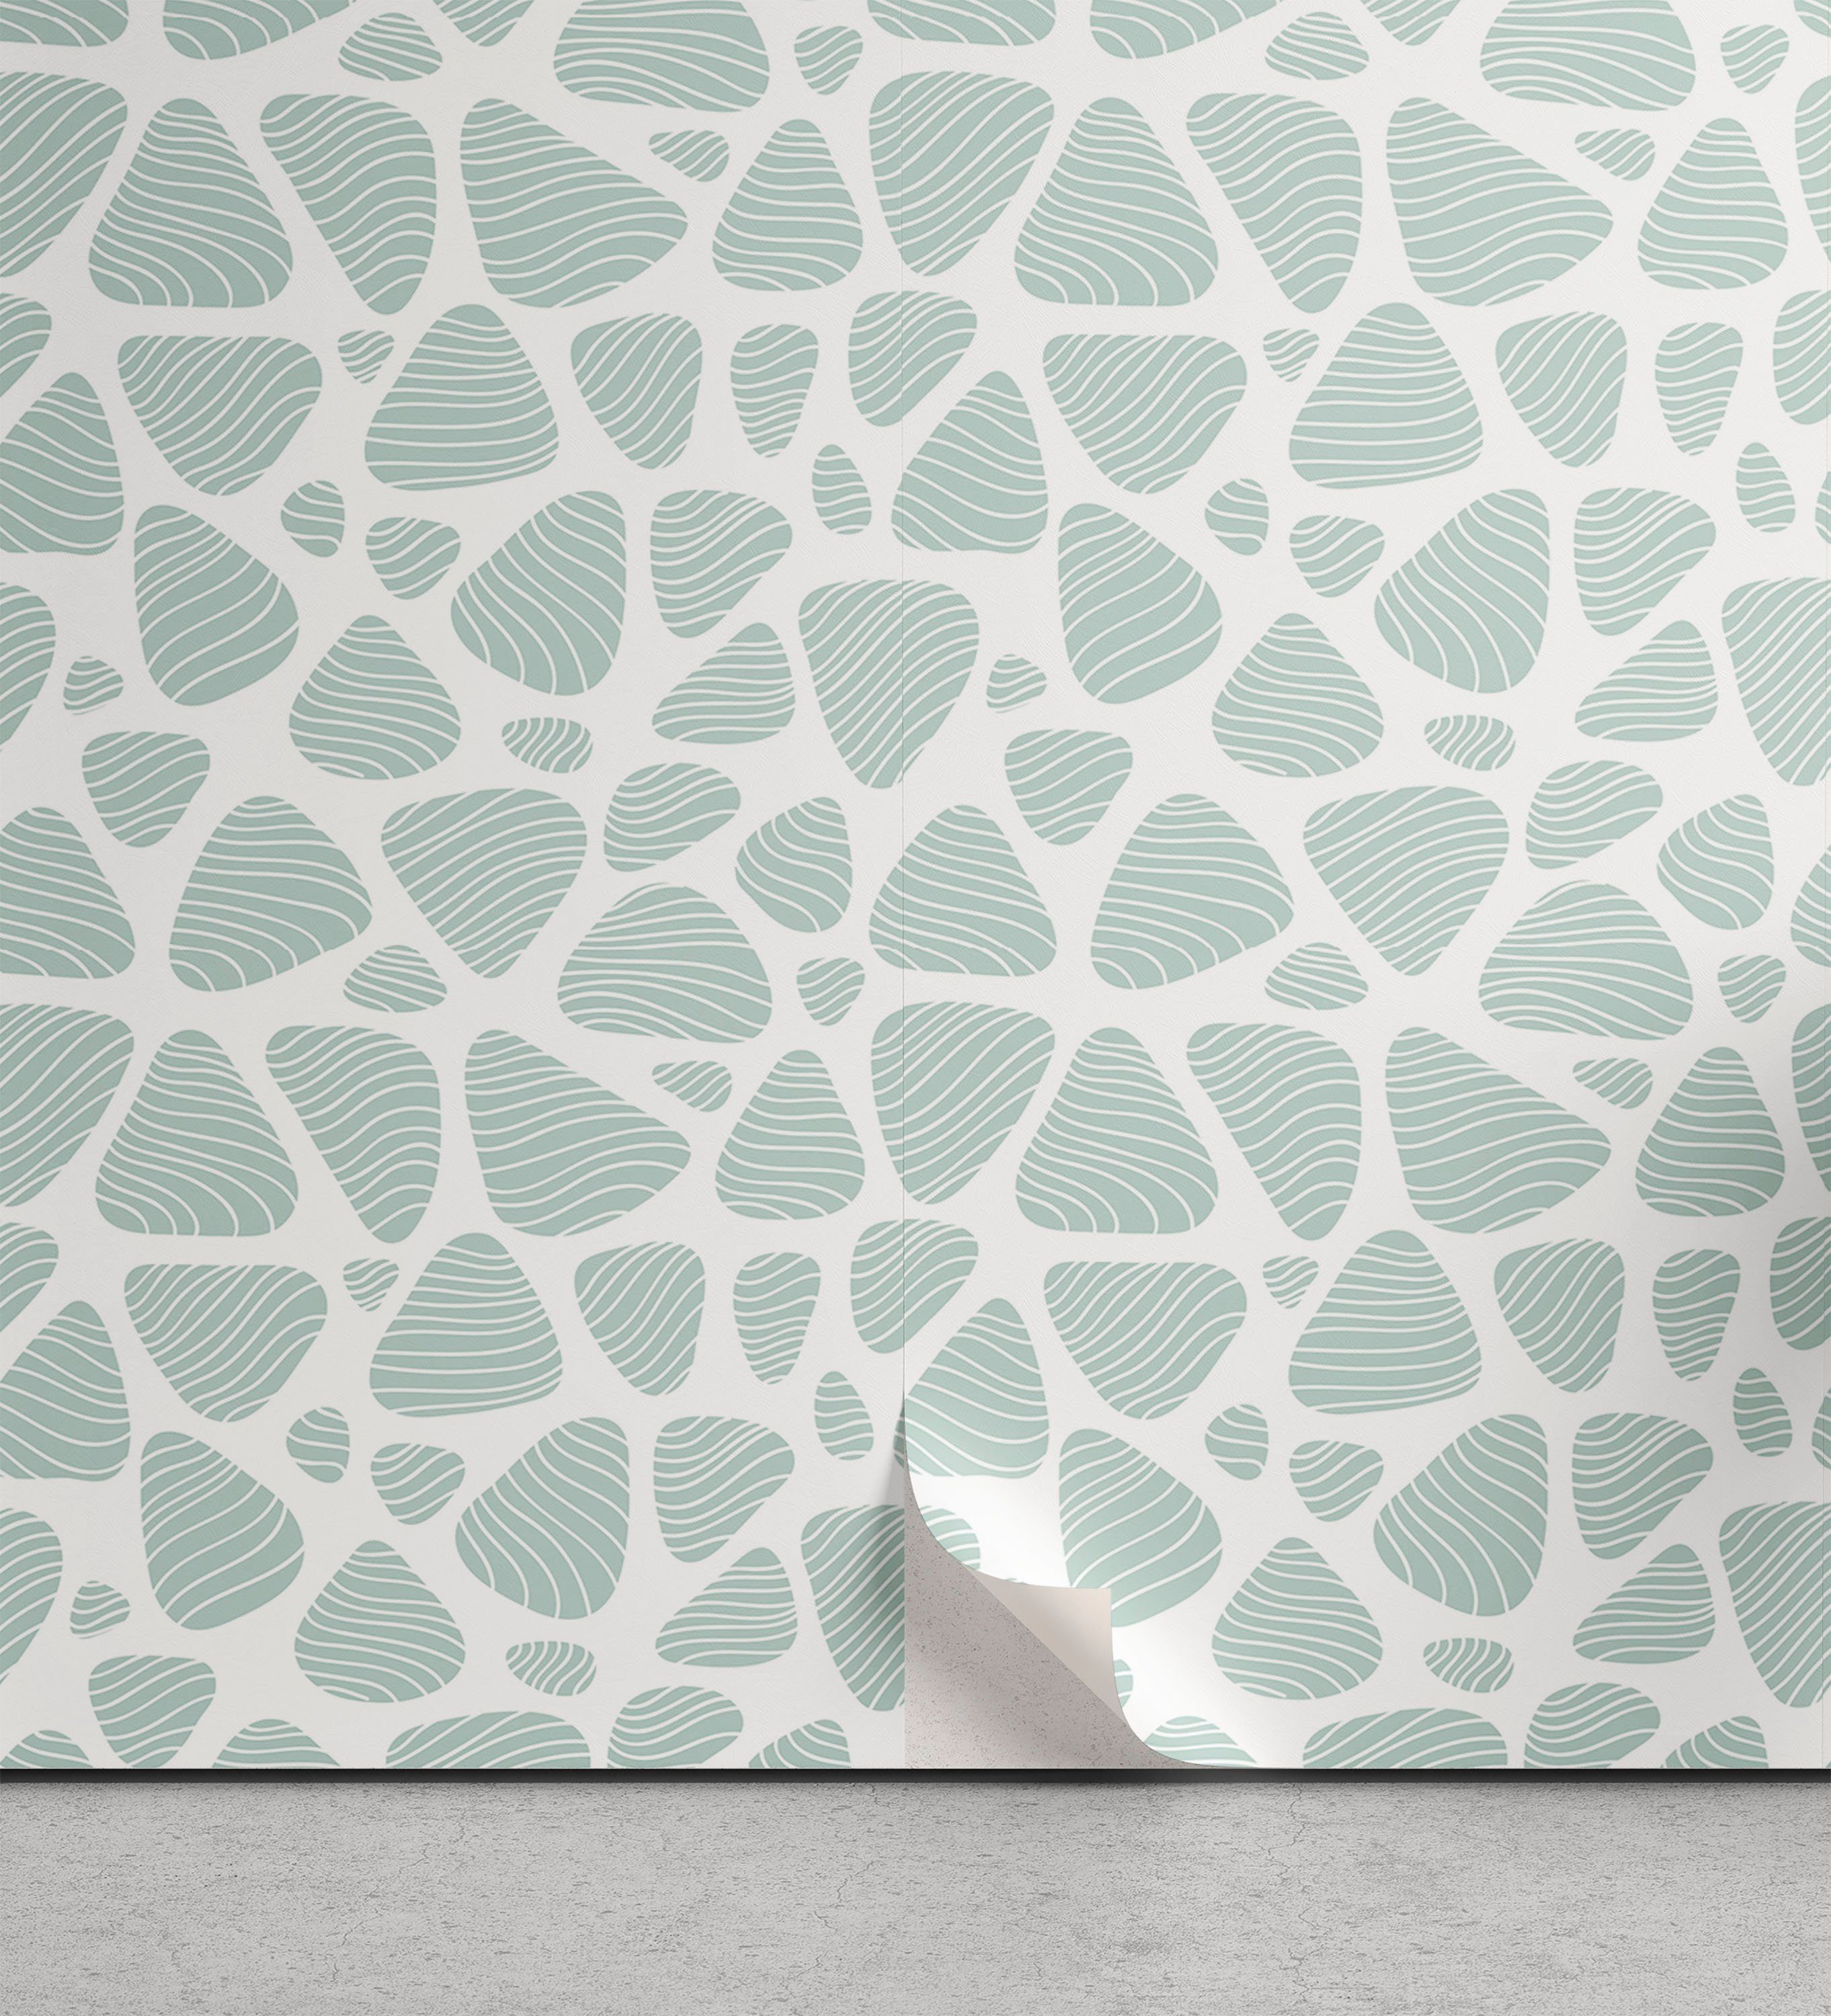 Abakuhaus Vinyltapete selbstklebendes Wohnzimmer Küchenakzent, Shapes Farbe Wie Pebble neutrale